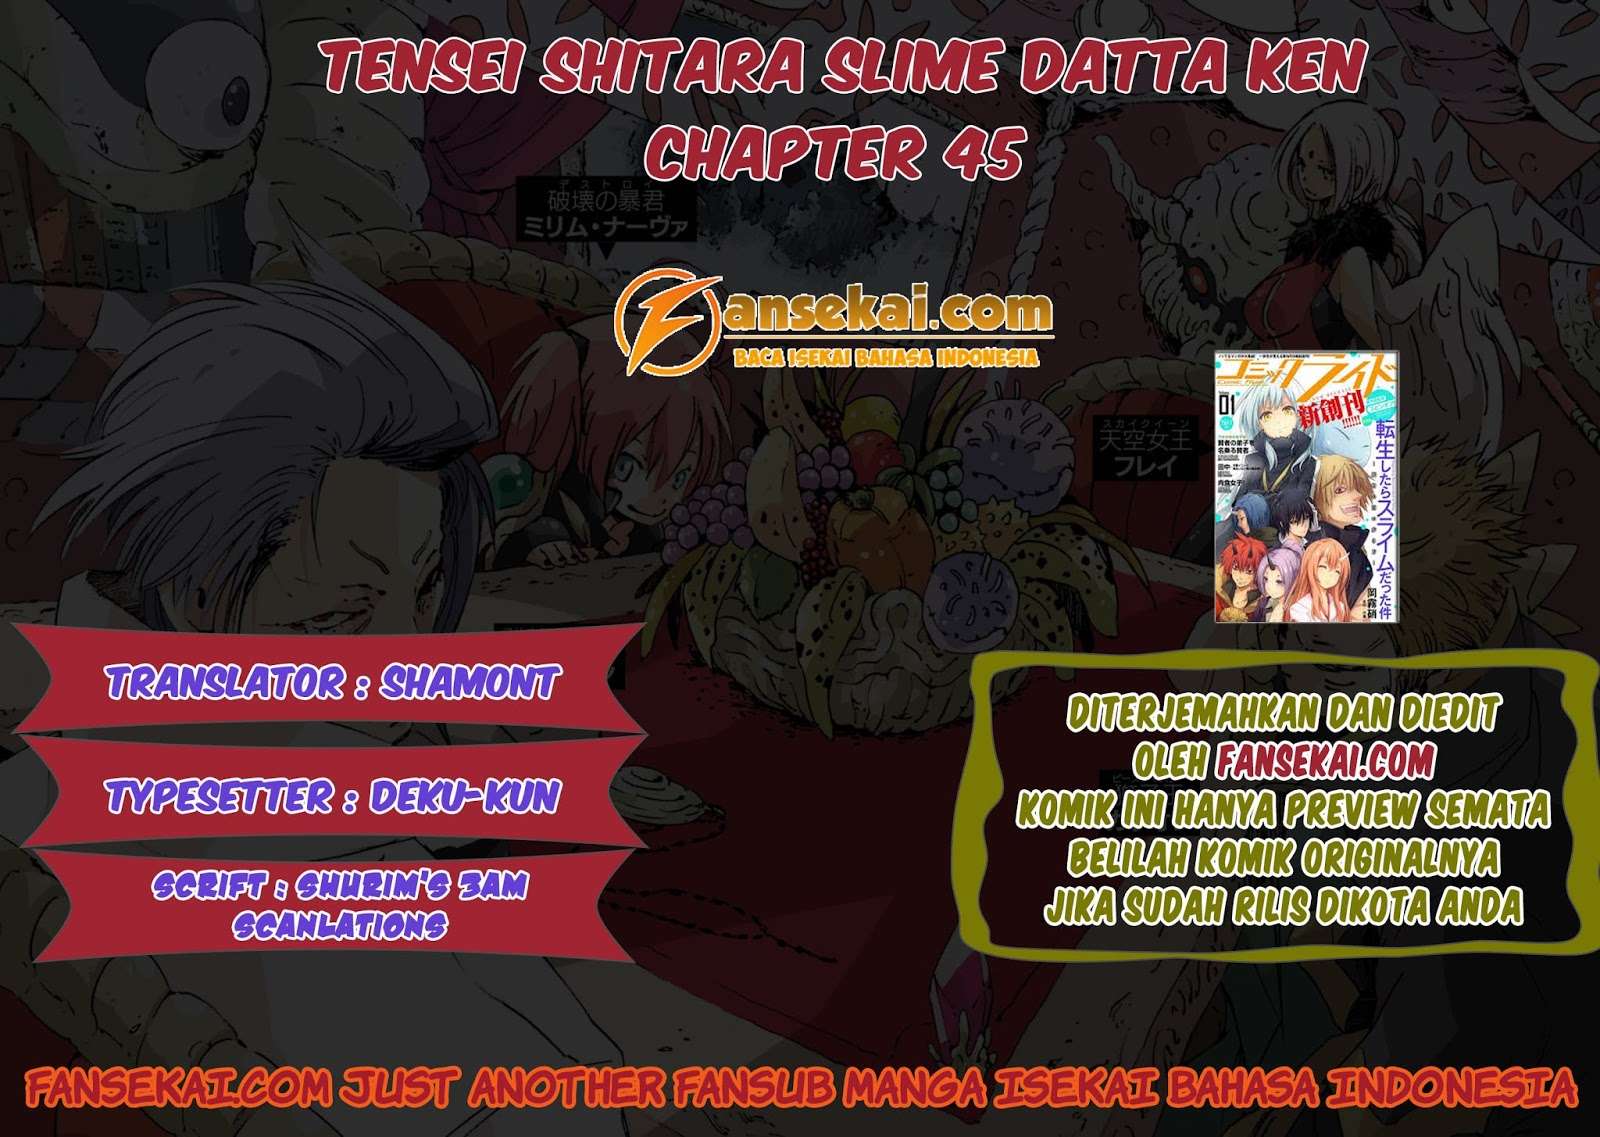 Tensei Shitara Slime Datta Ken Chapter 45 1